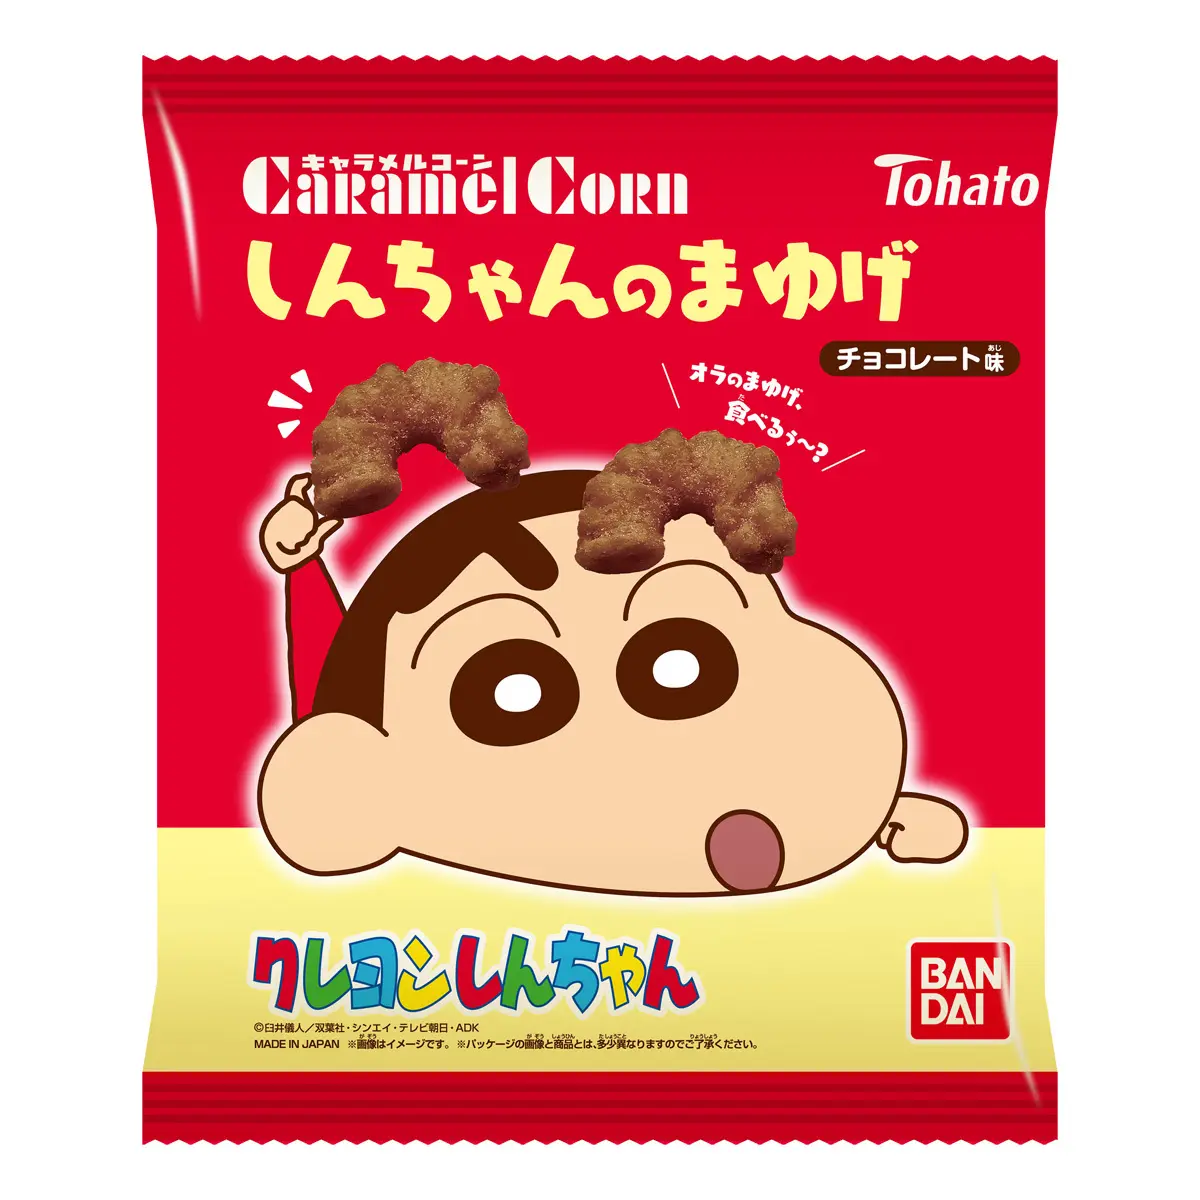 Tohato Shin Chan's Eyebrows Caramel Corn - Chocolate Flavor